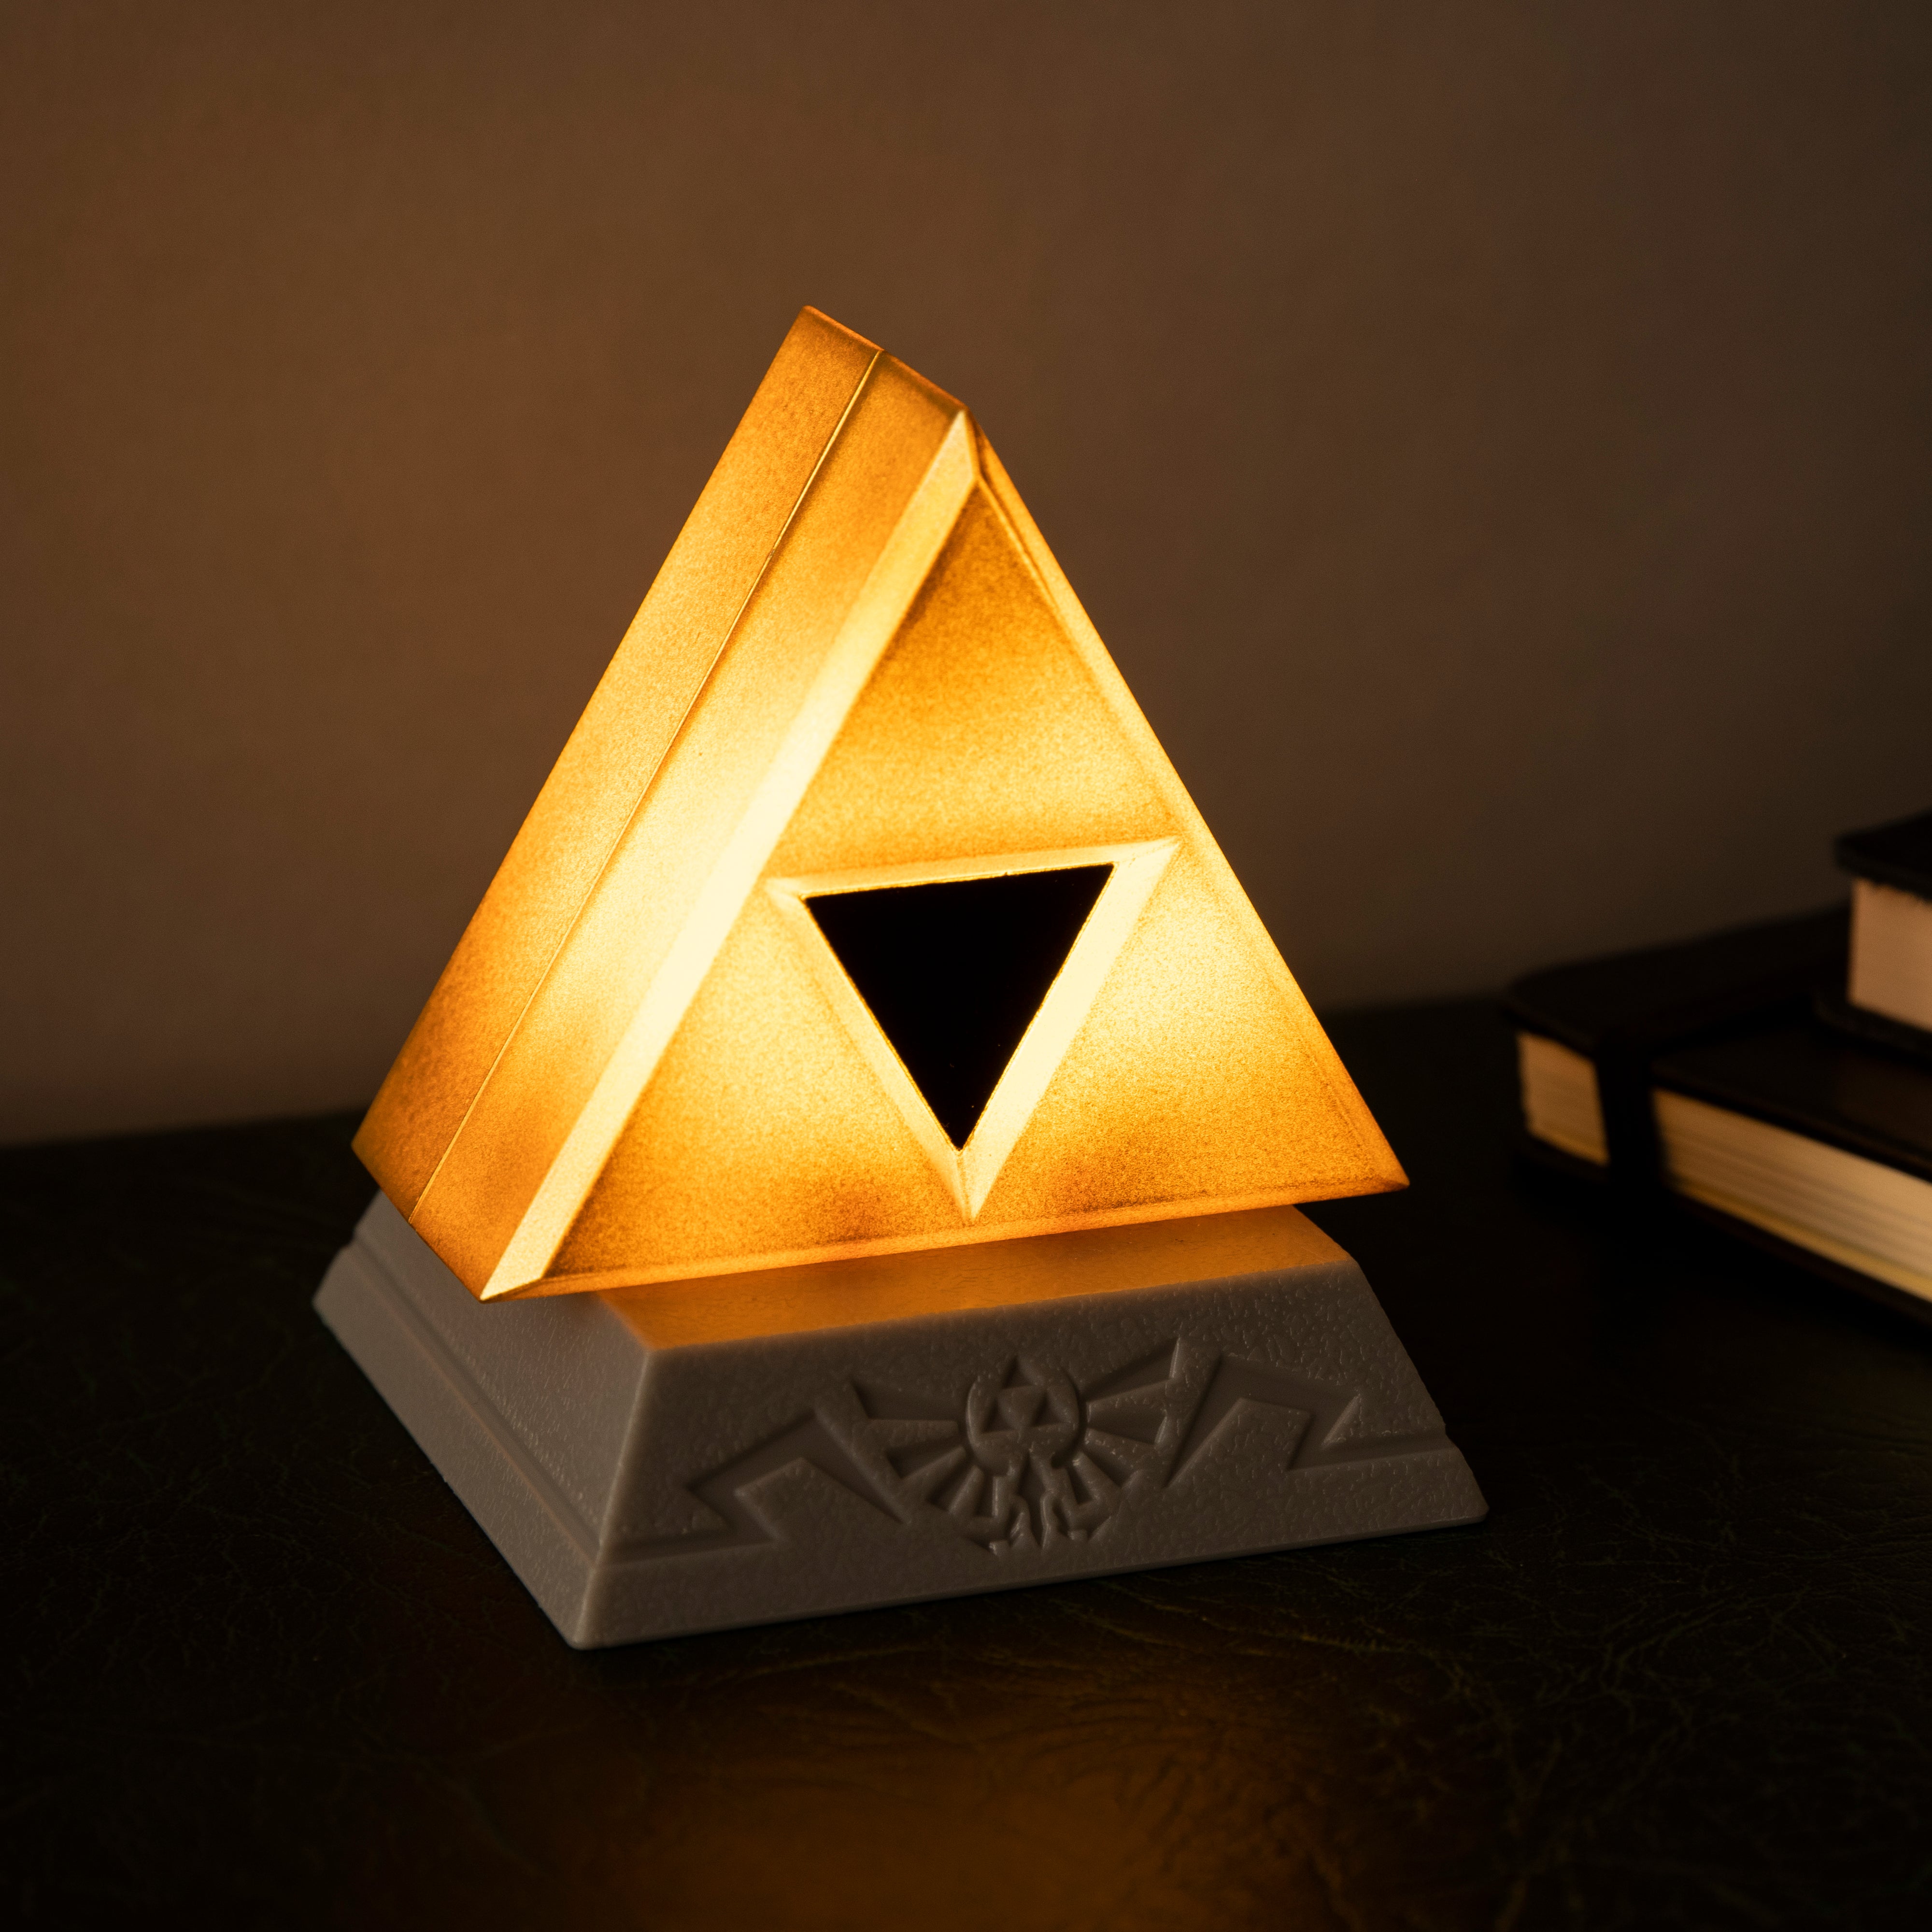 Zelda Triforce Icon Light